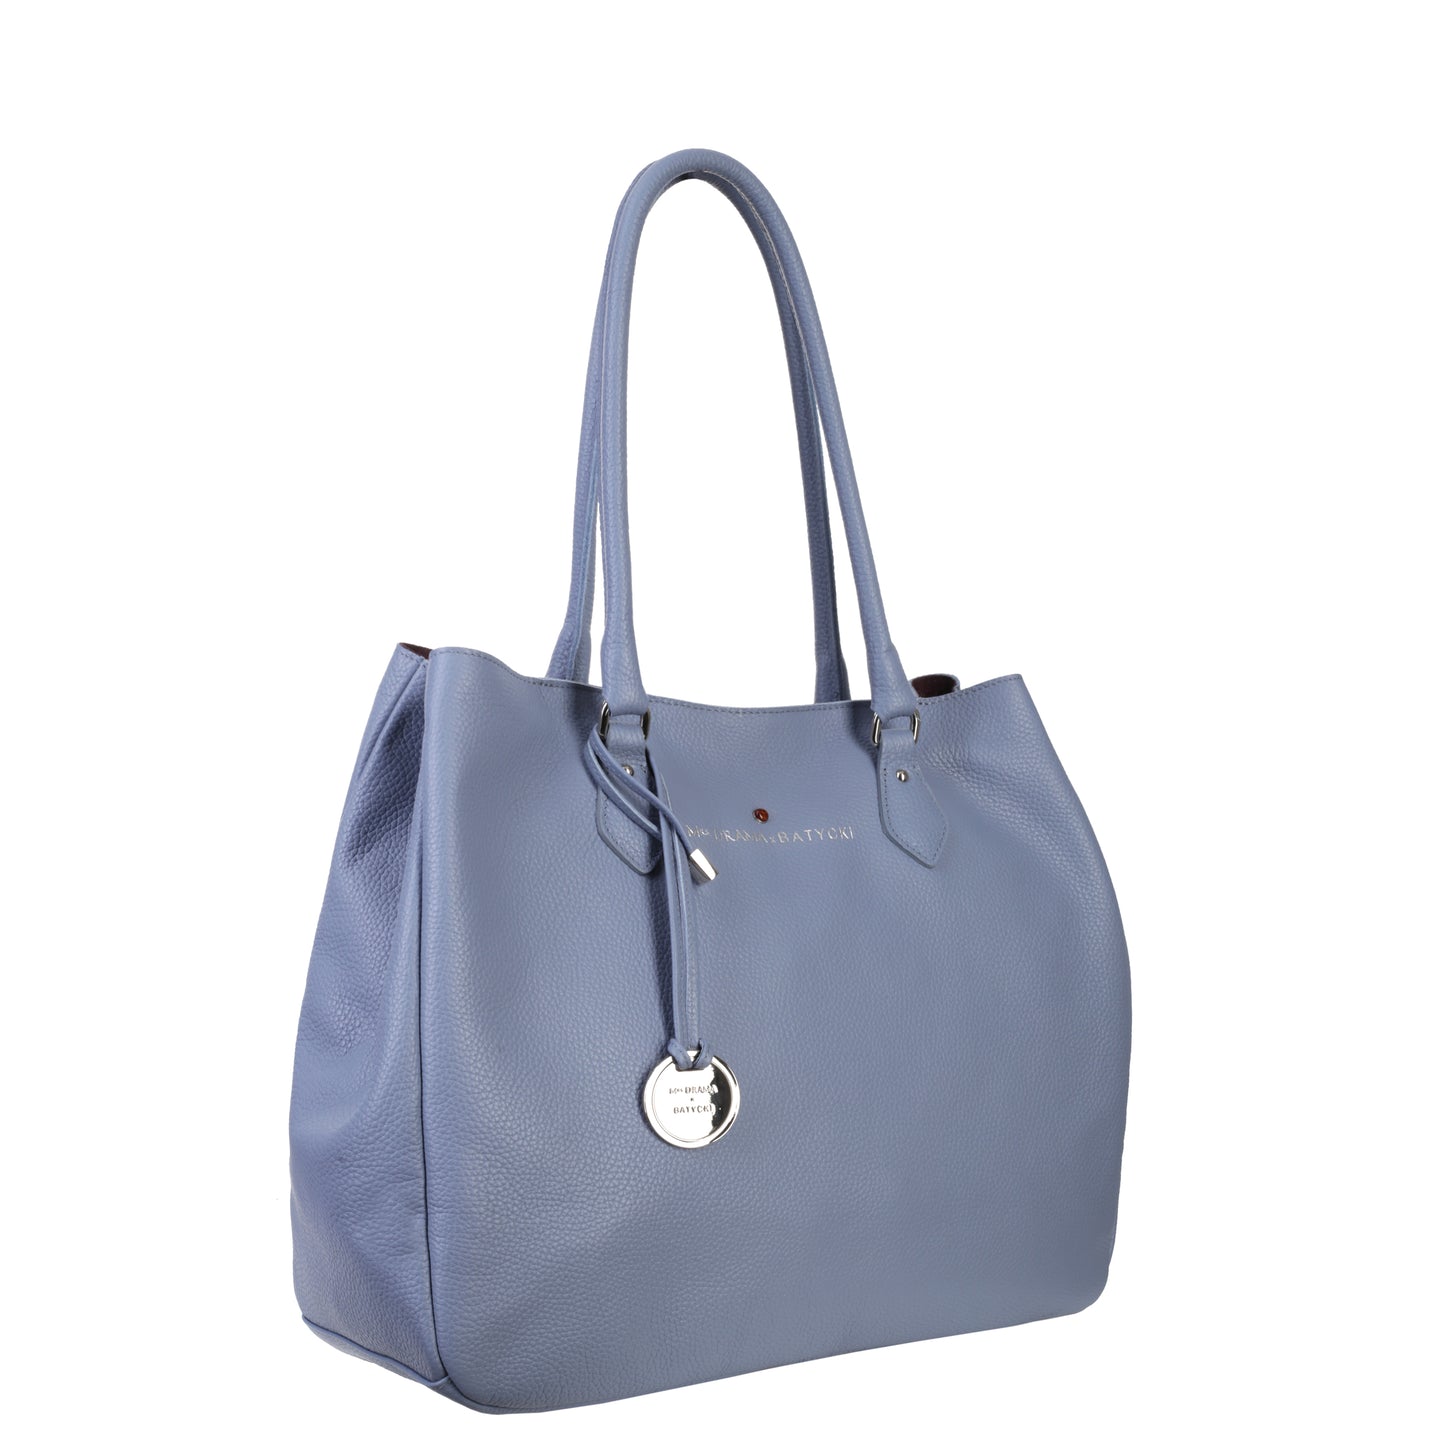 ONE MRS DRAMA x BATYCKI mousse azure women's leather handbag